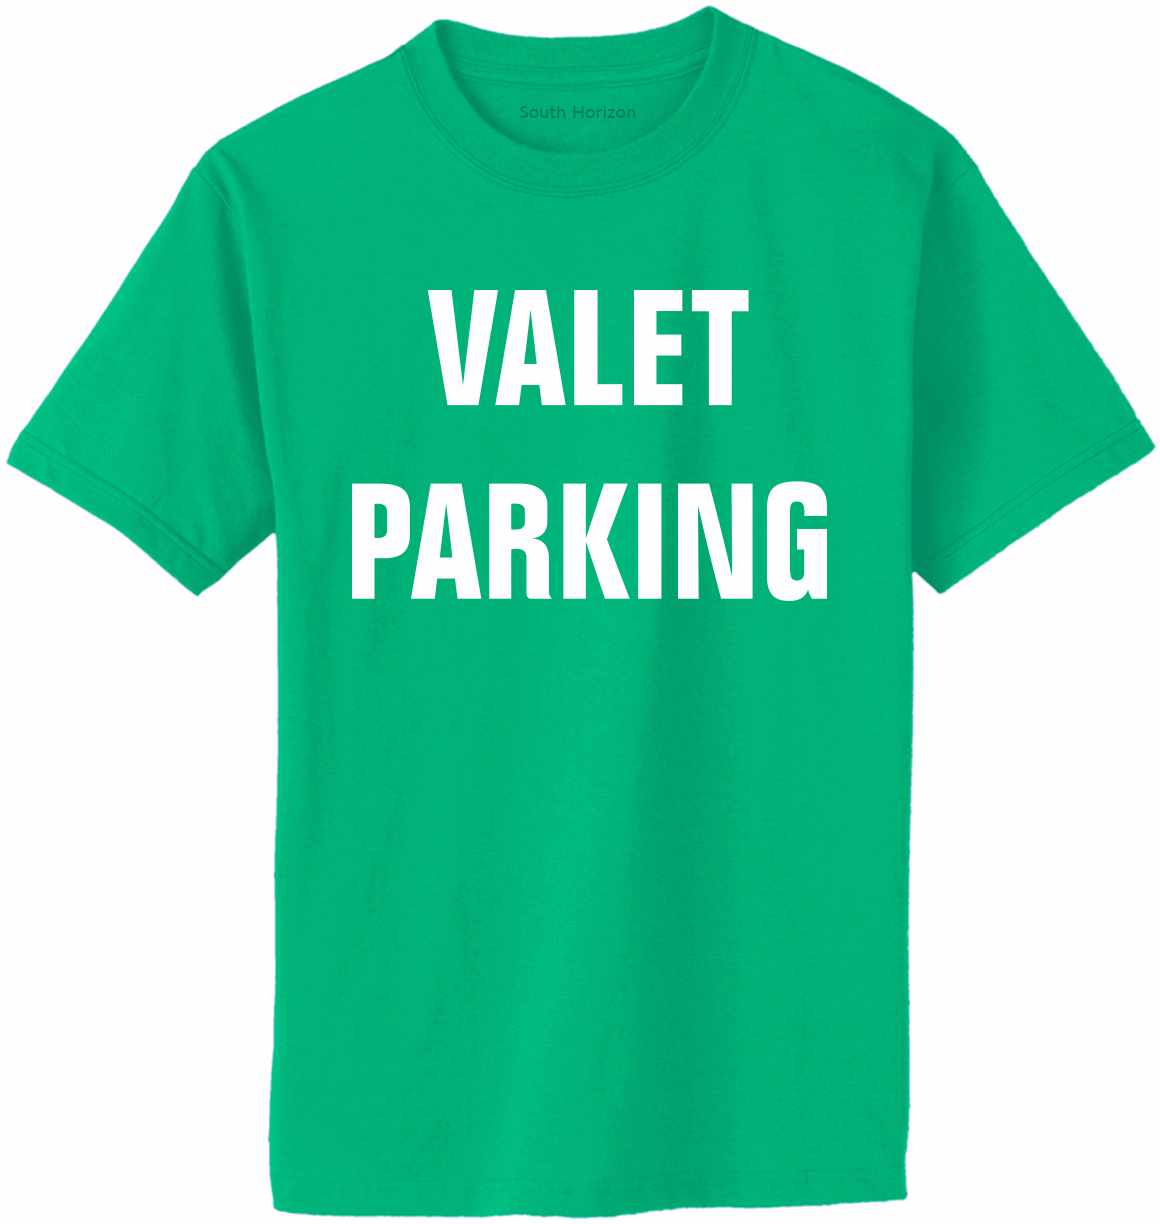 VALET PARKING Adult T-Shirt (#208-1)